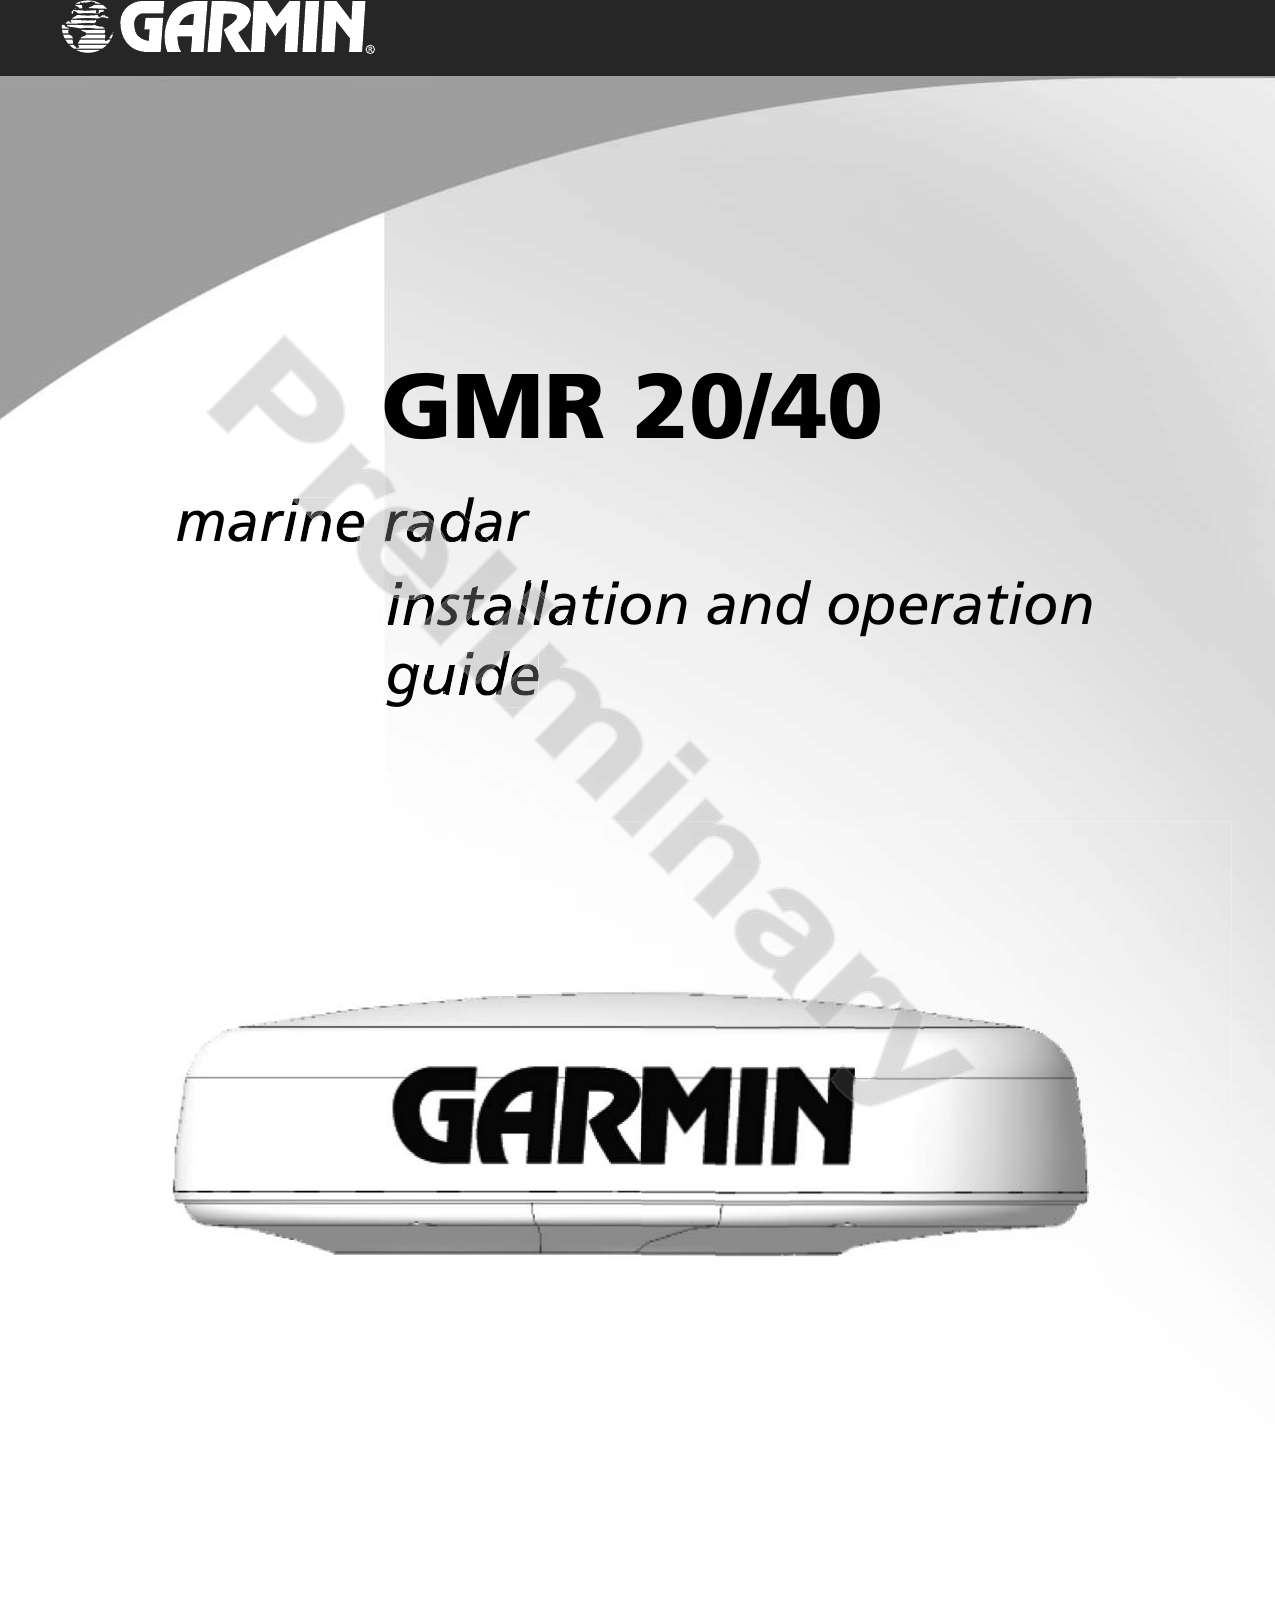 GMR 20/40marine radarinstallation and operation guide